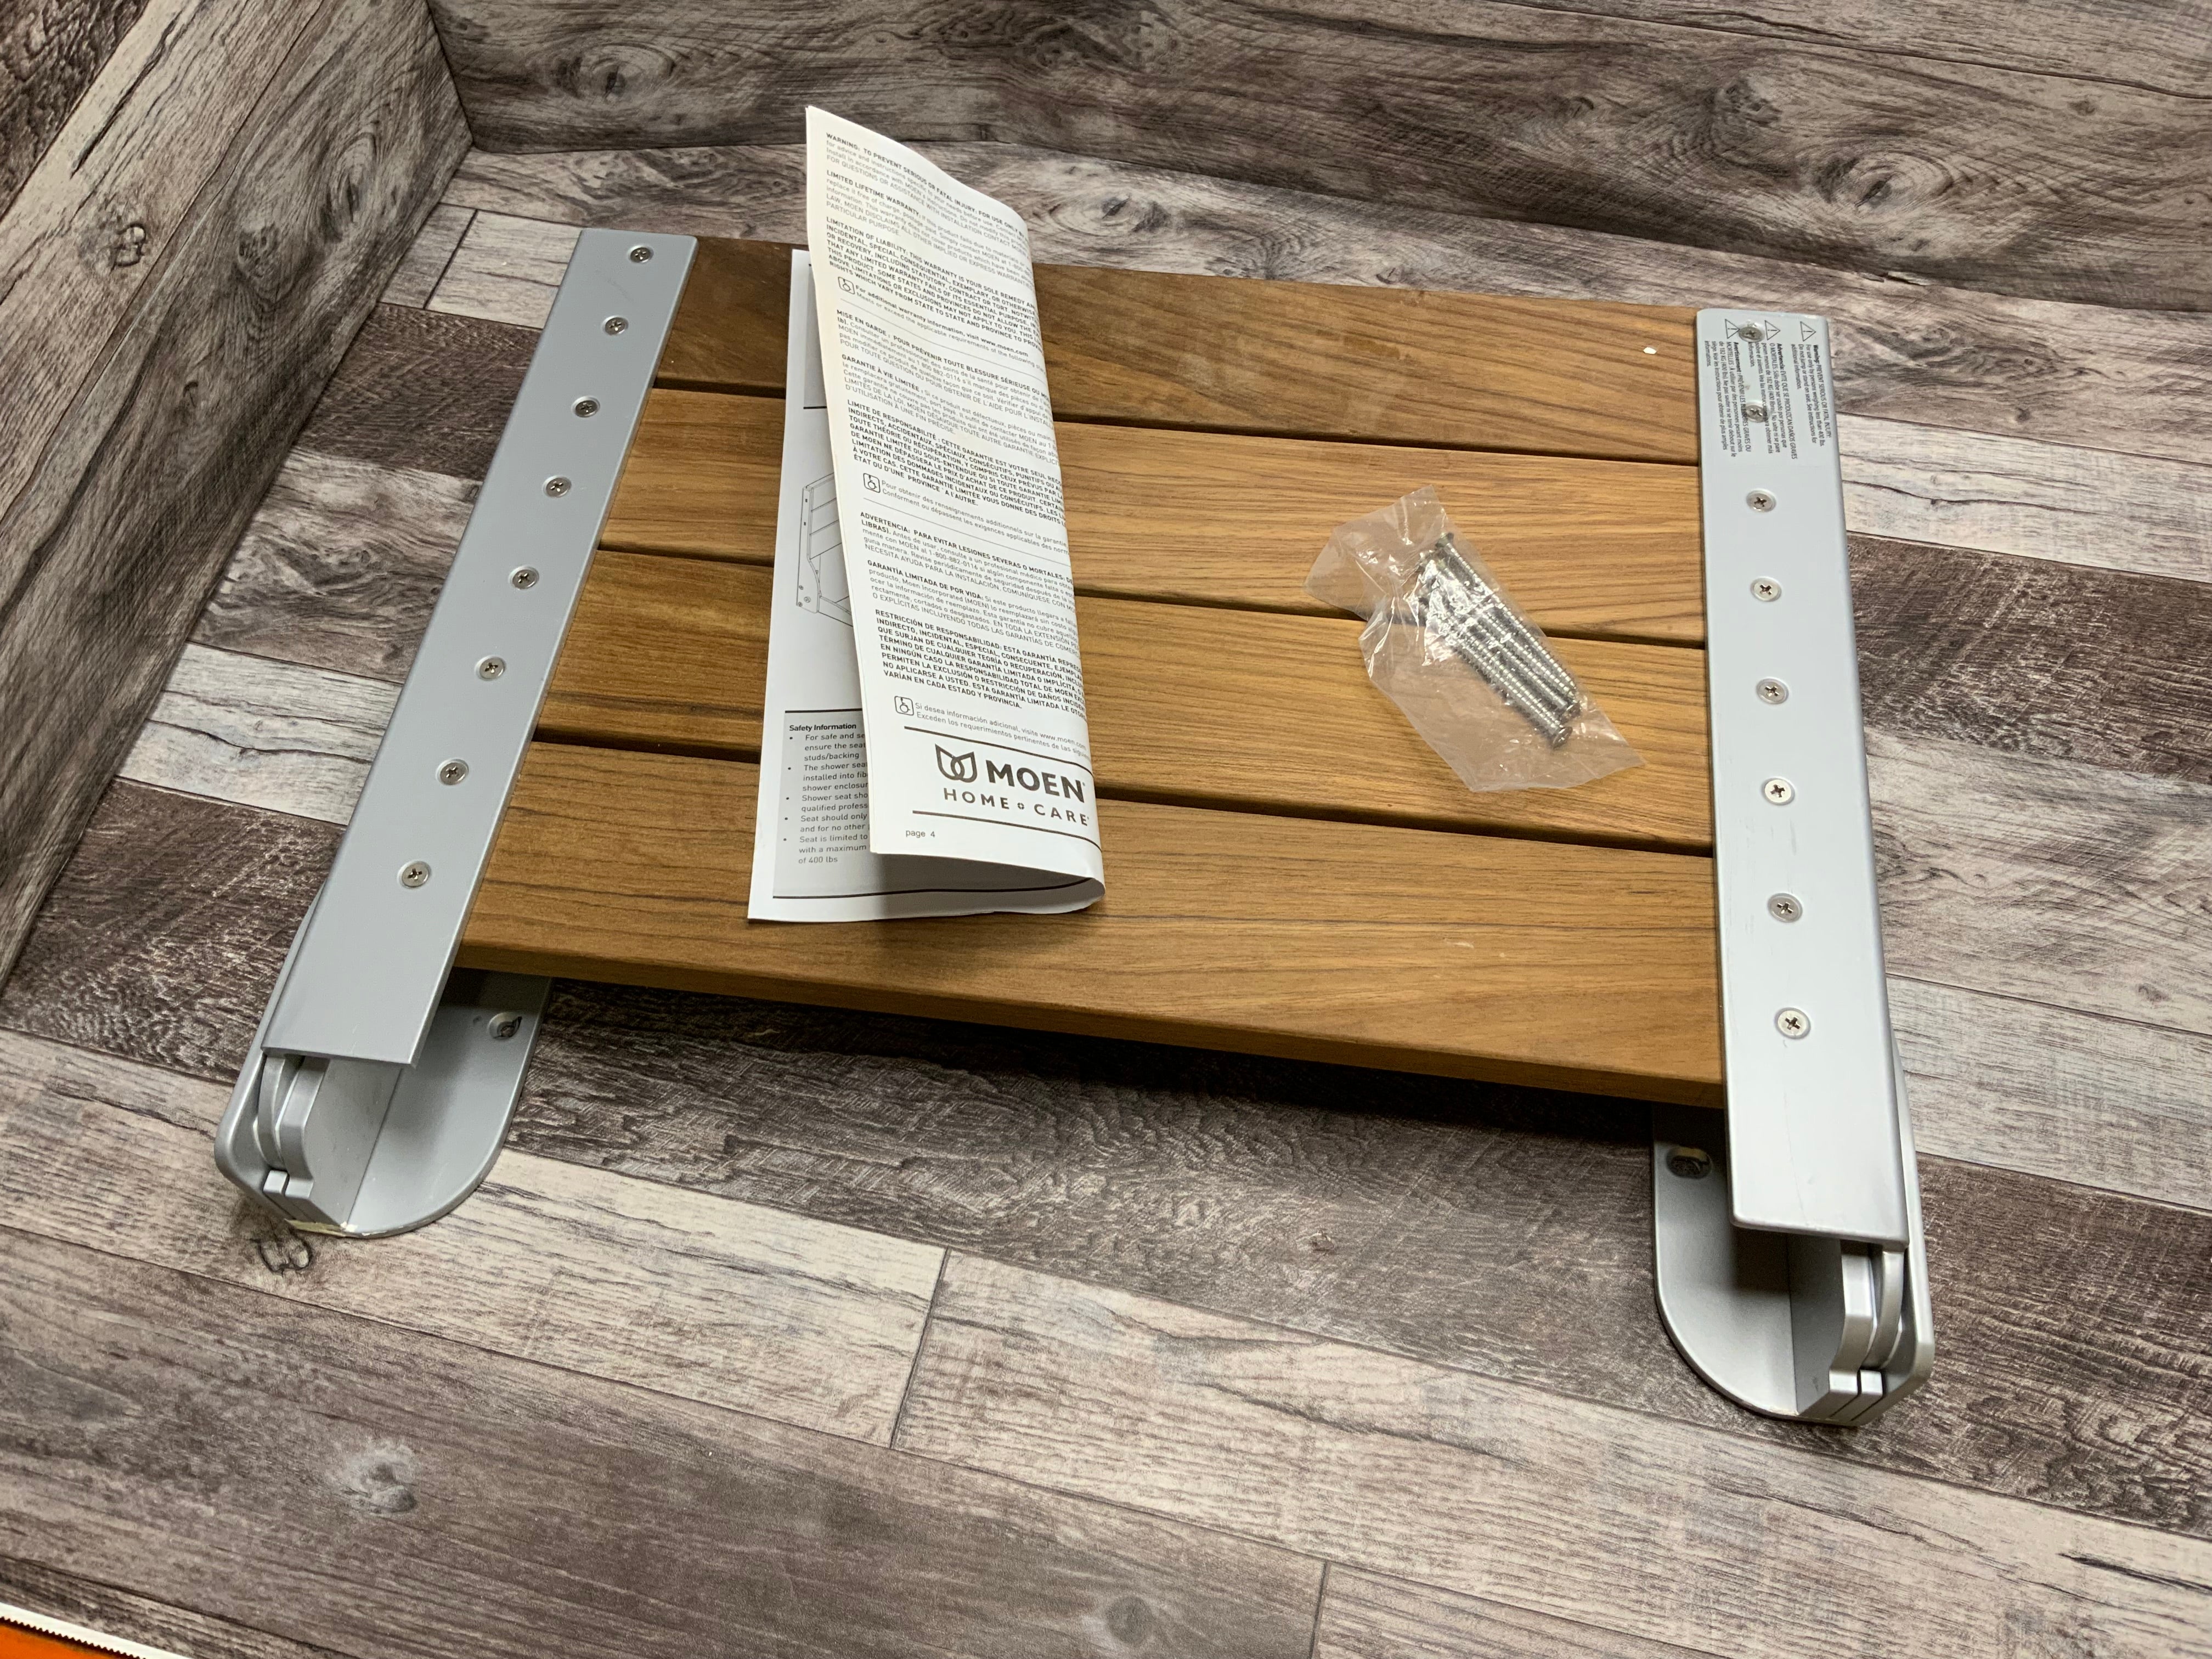 Moen Bath Safety Furniture Wood Home Care Teak Wood Aluminum Folding Shower Seat (8183549329646)